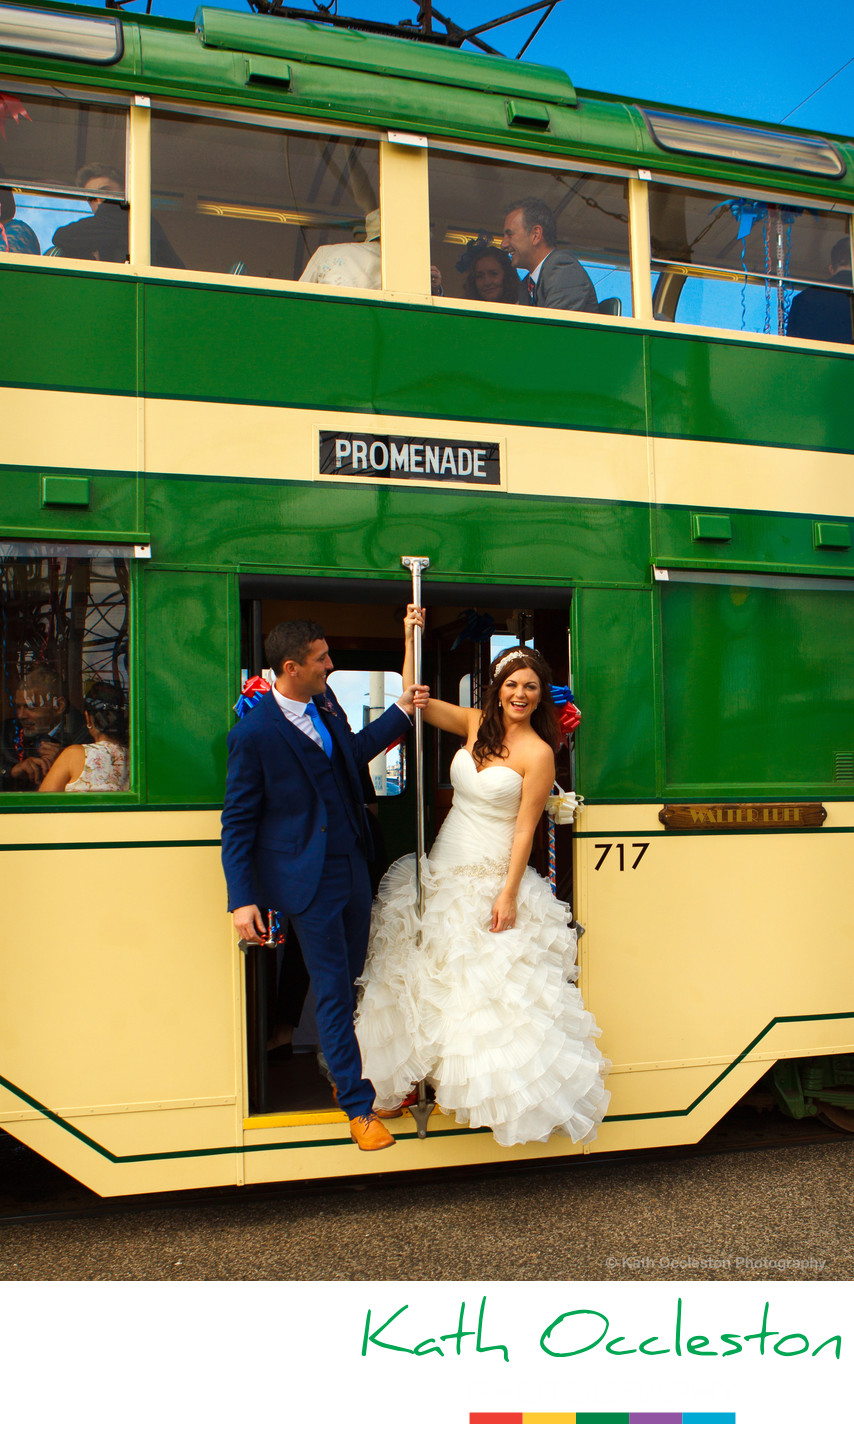 Blackpool wedding tram